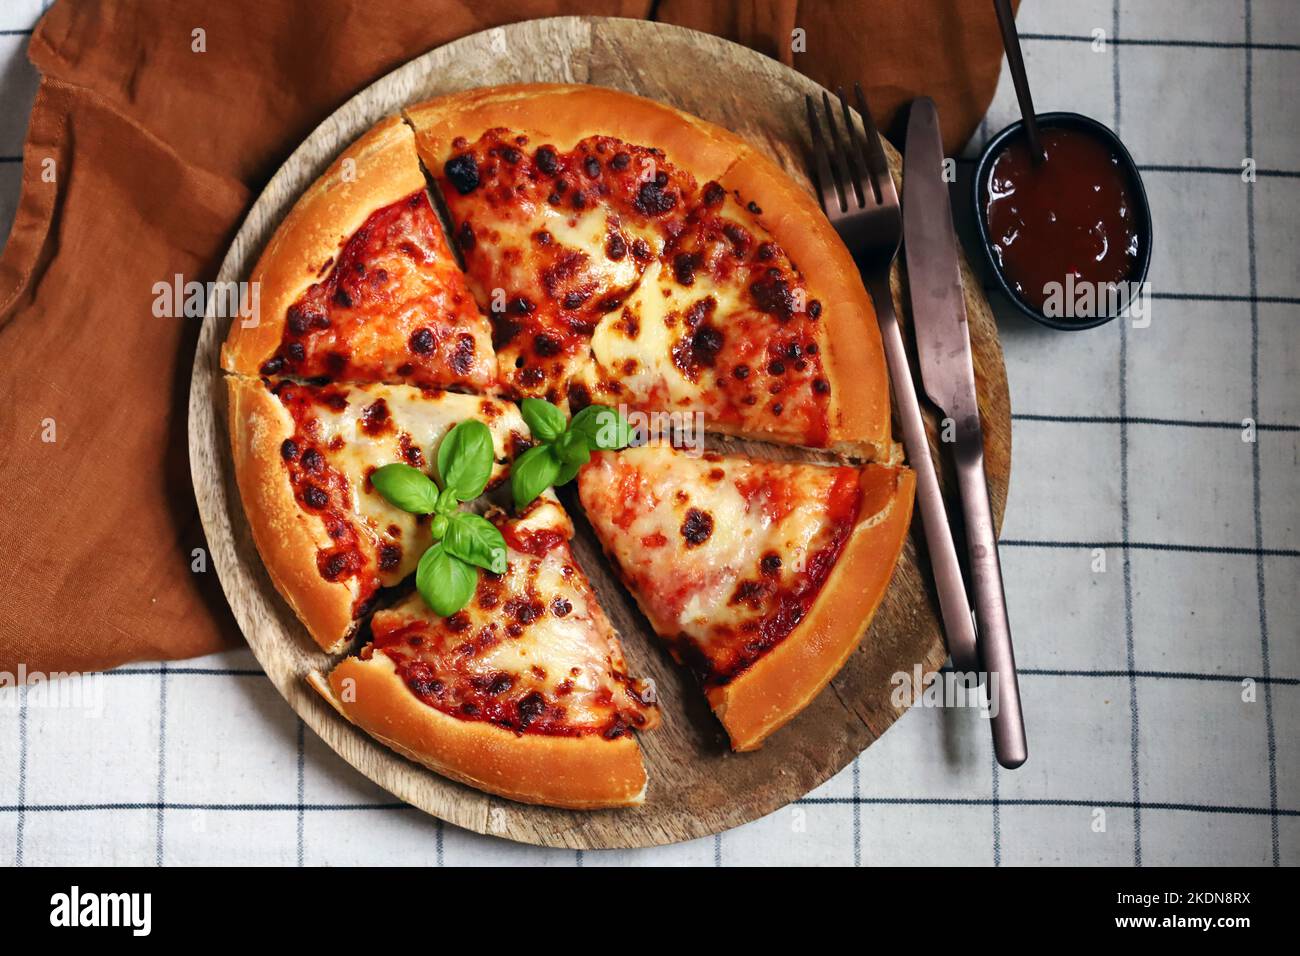 Fresh hot margarita pizza. Stock Photo